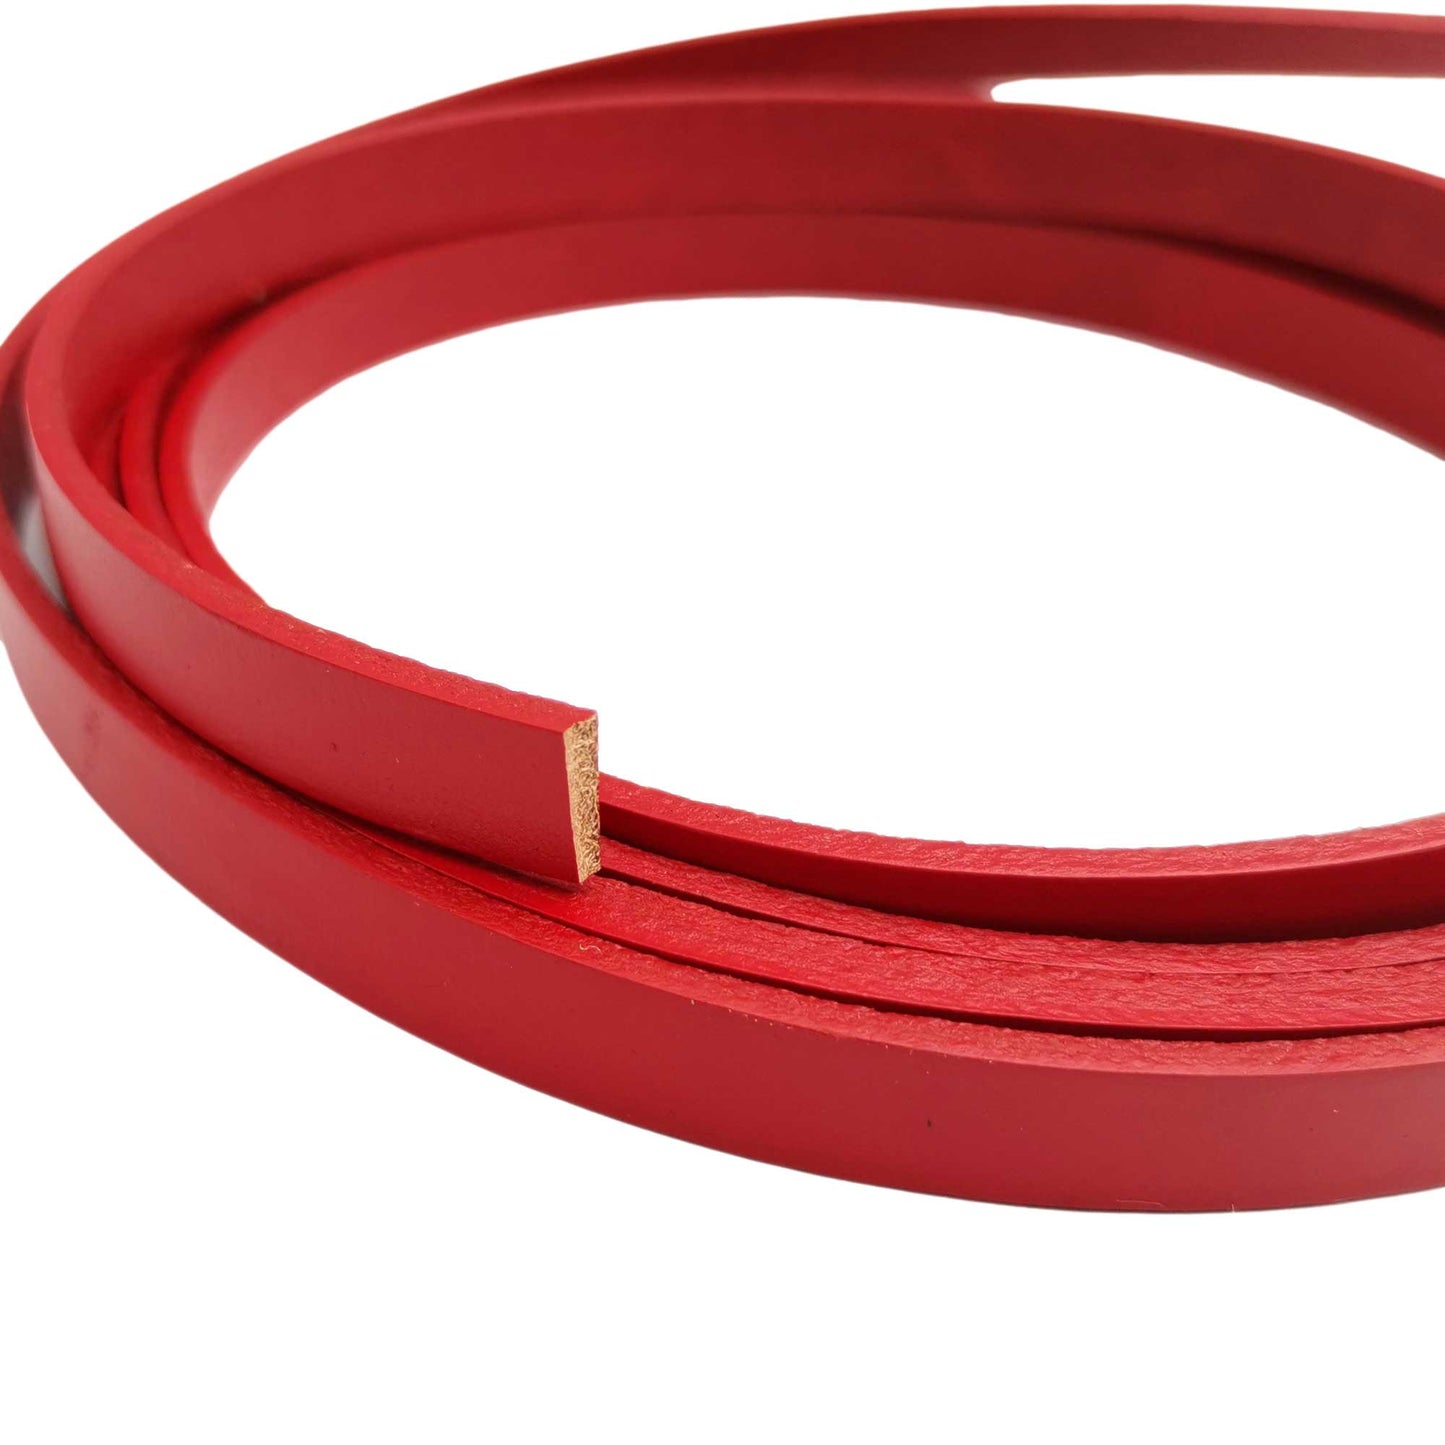 ShapesbyX-8mm cordon en cuir plat rouge bande de cuir 8x2mm bande de cuir véritable